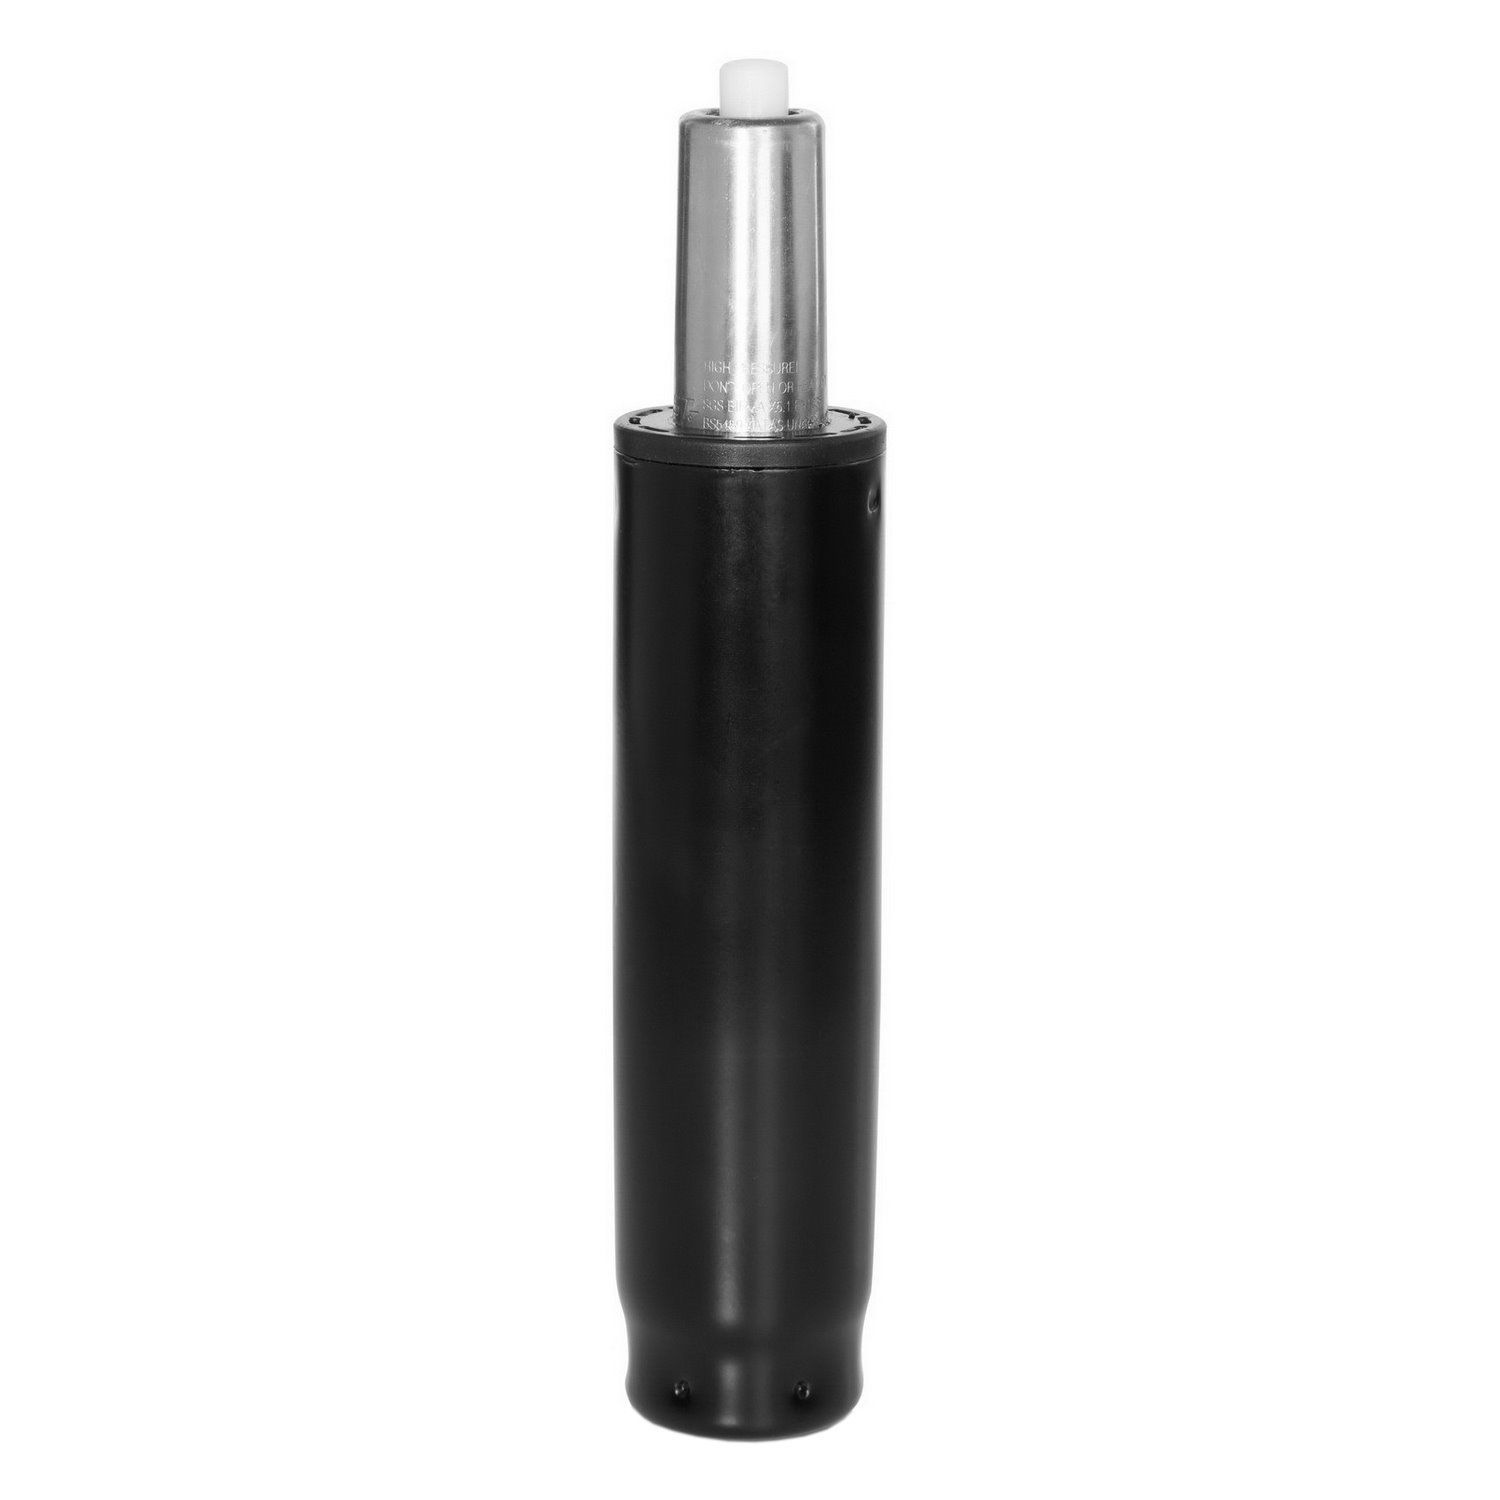 Gasfeder / Gasdruckfeder L - schwarz, 29-40 cm hjh OFFICE